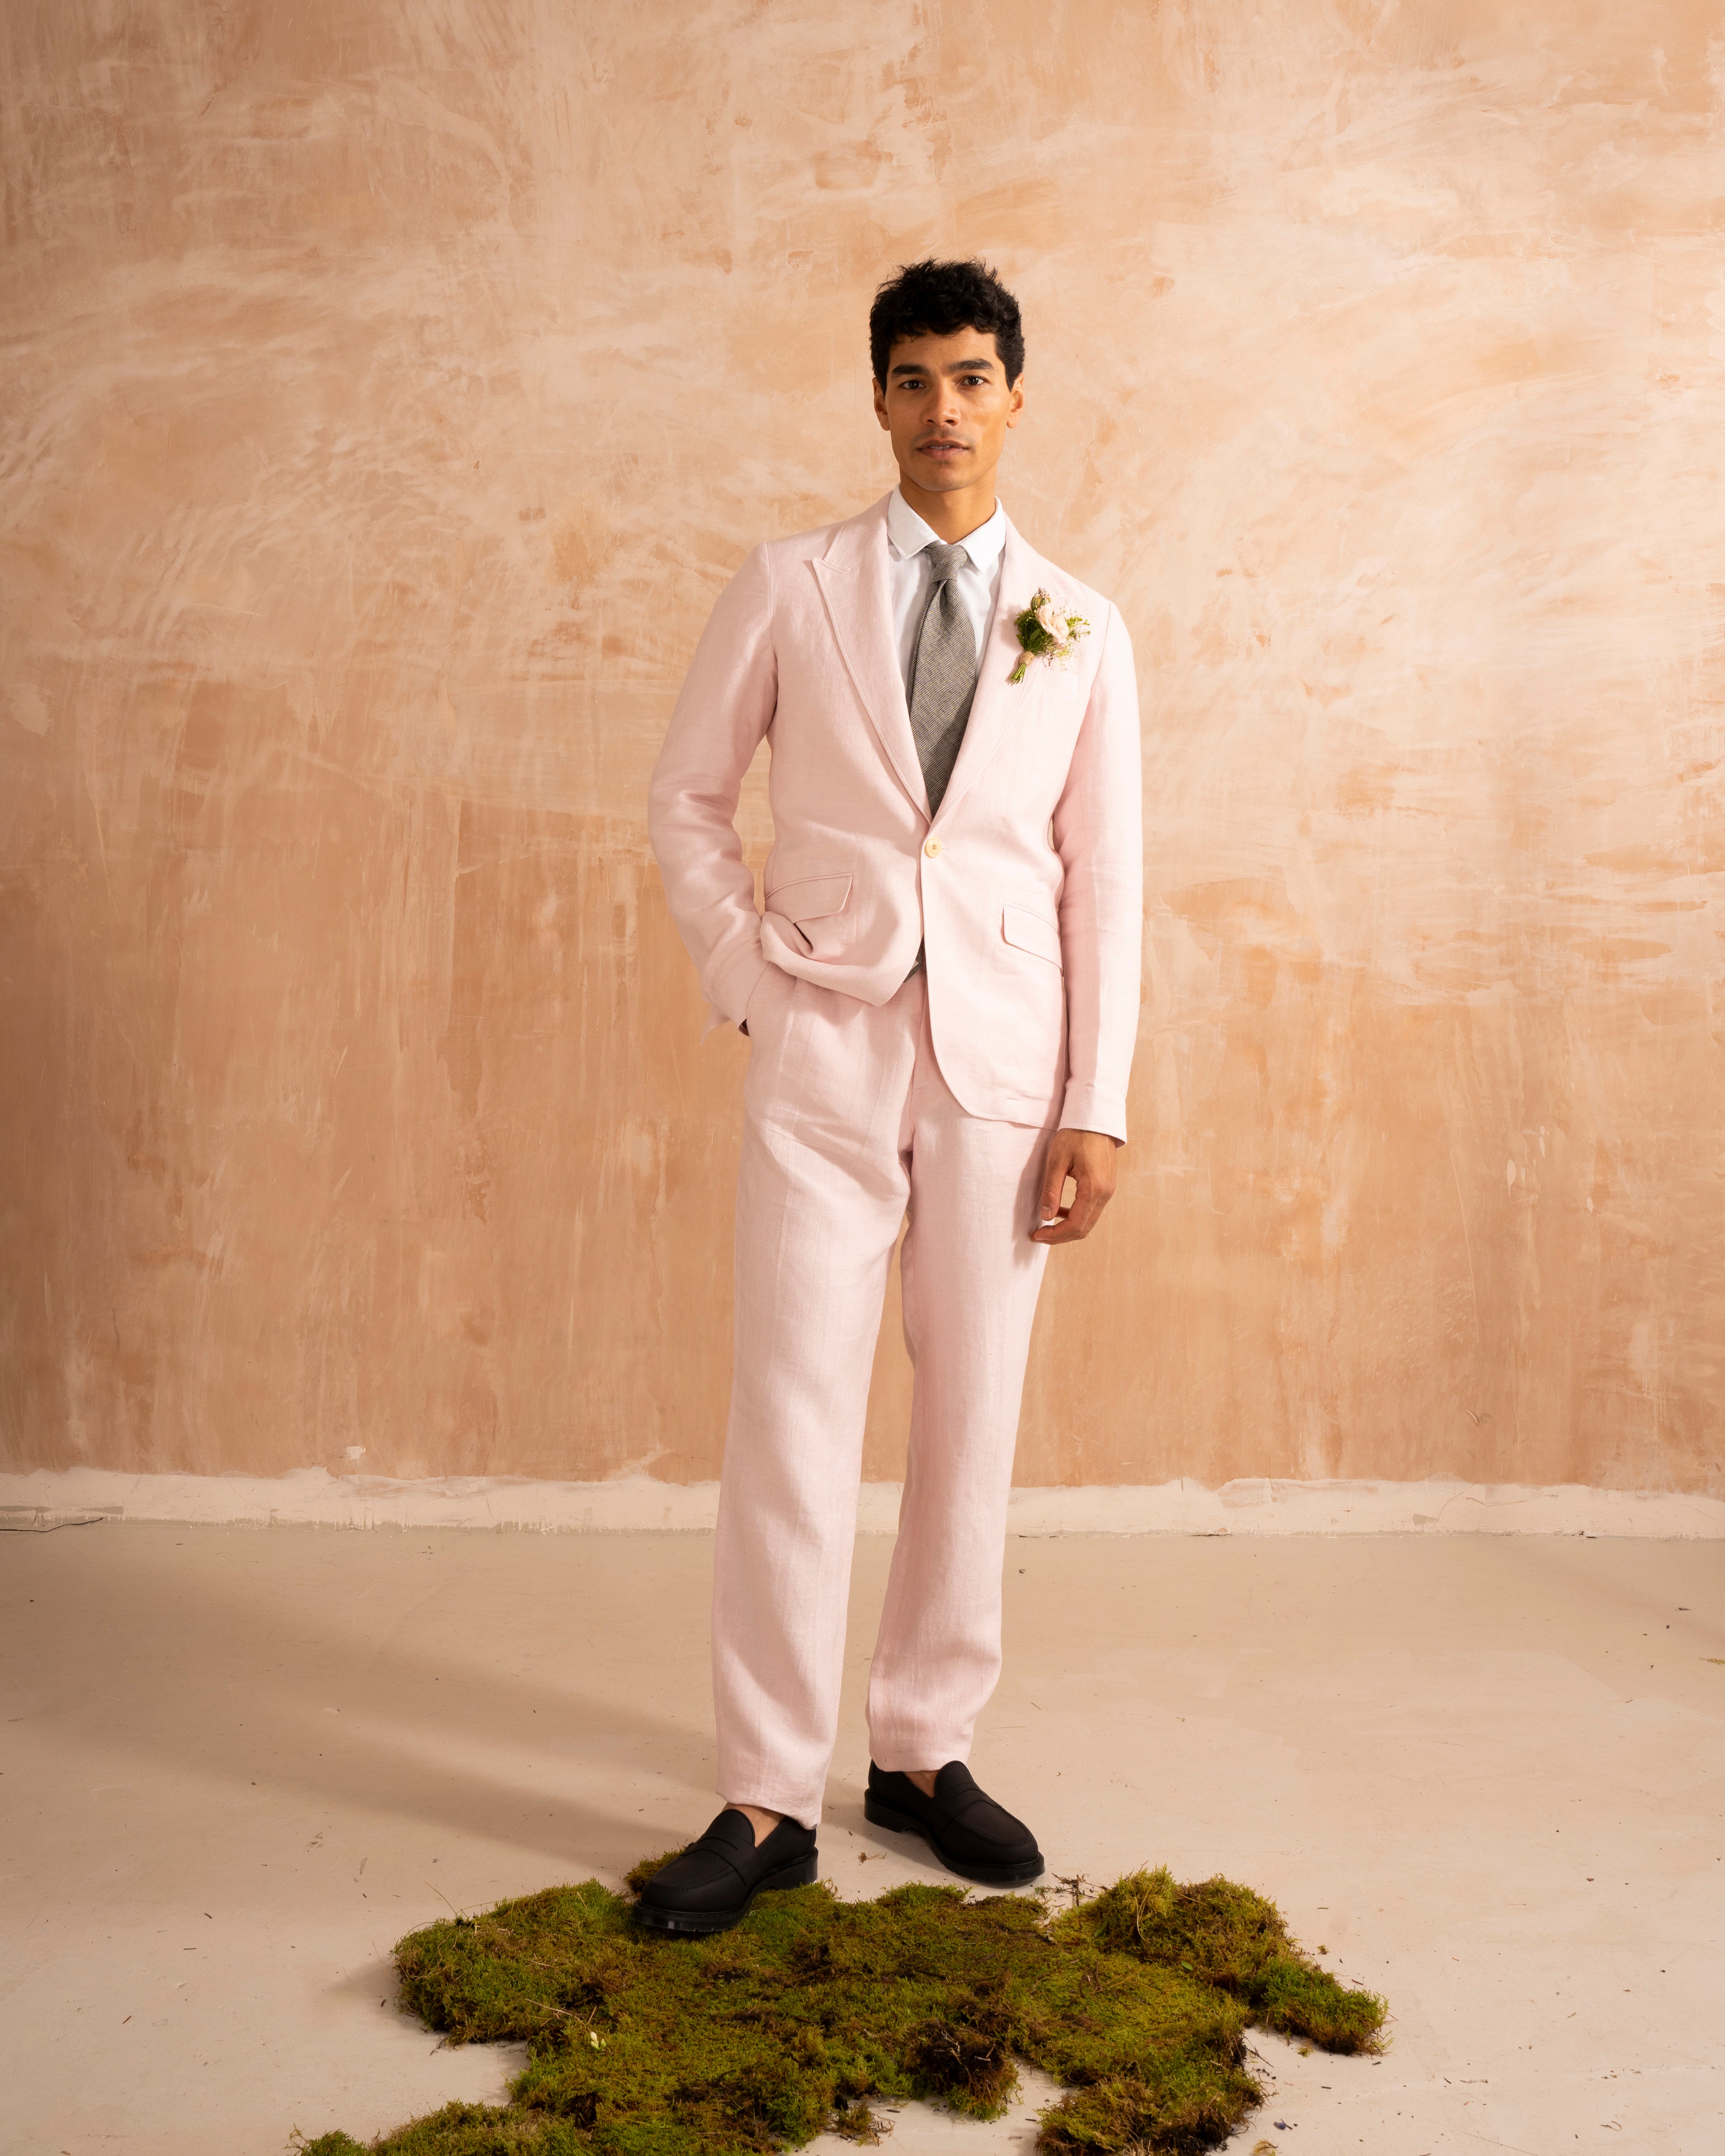 Pink Drescher Wyndhams Suit